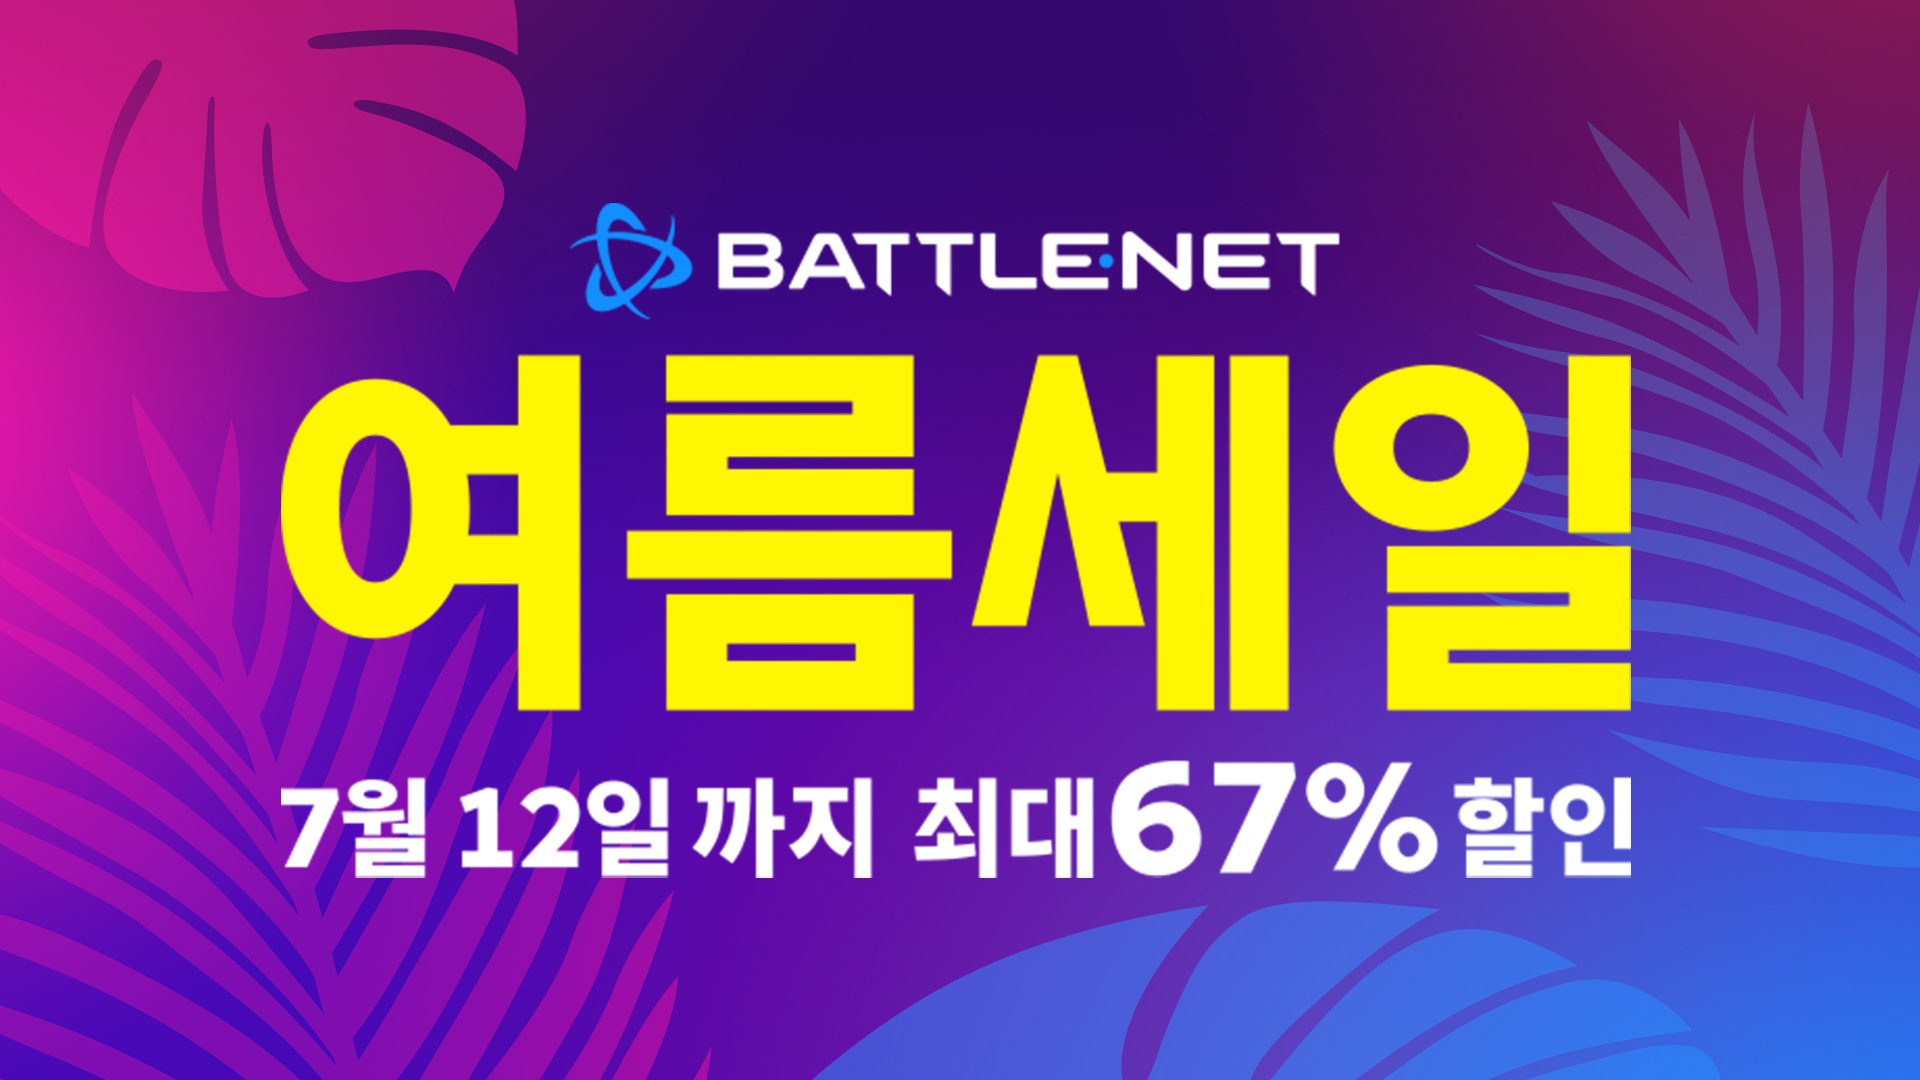 Battle.net 여름 할인의 막이 올랐습니다!